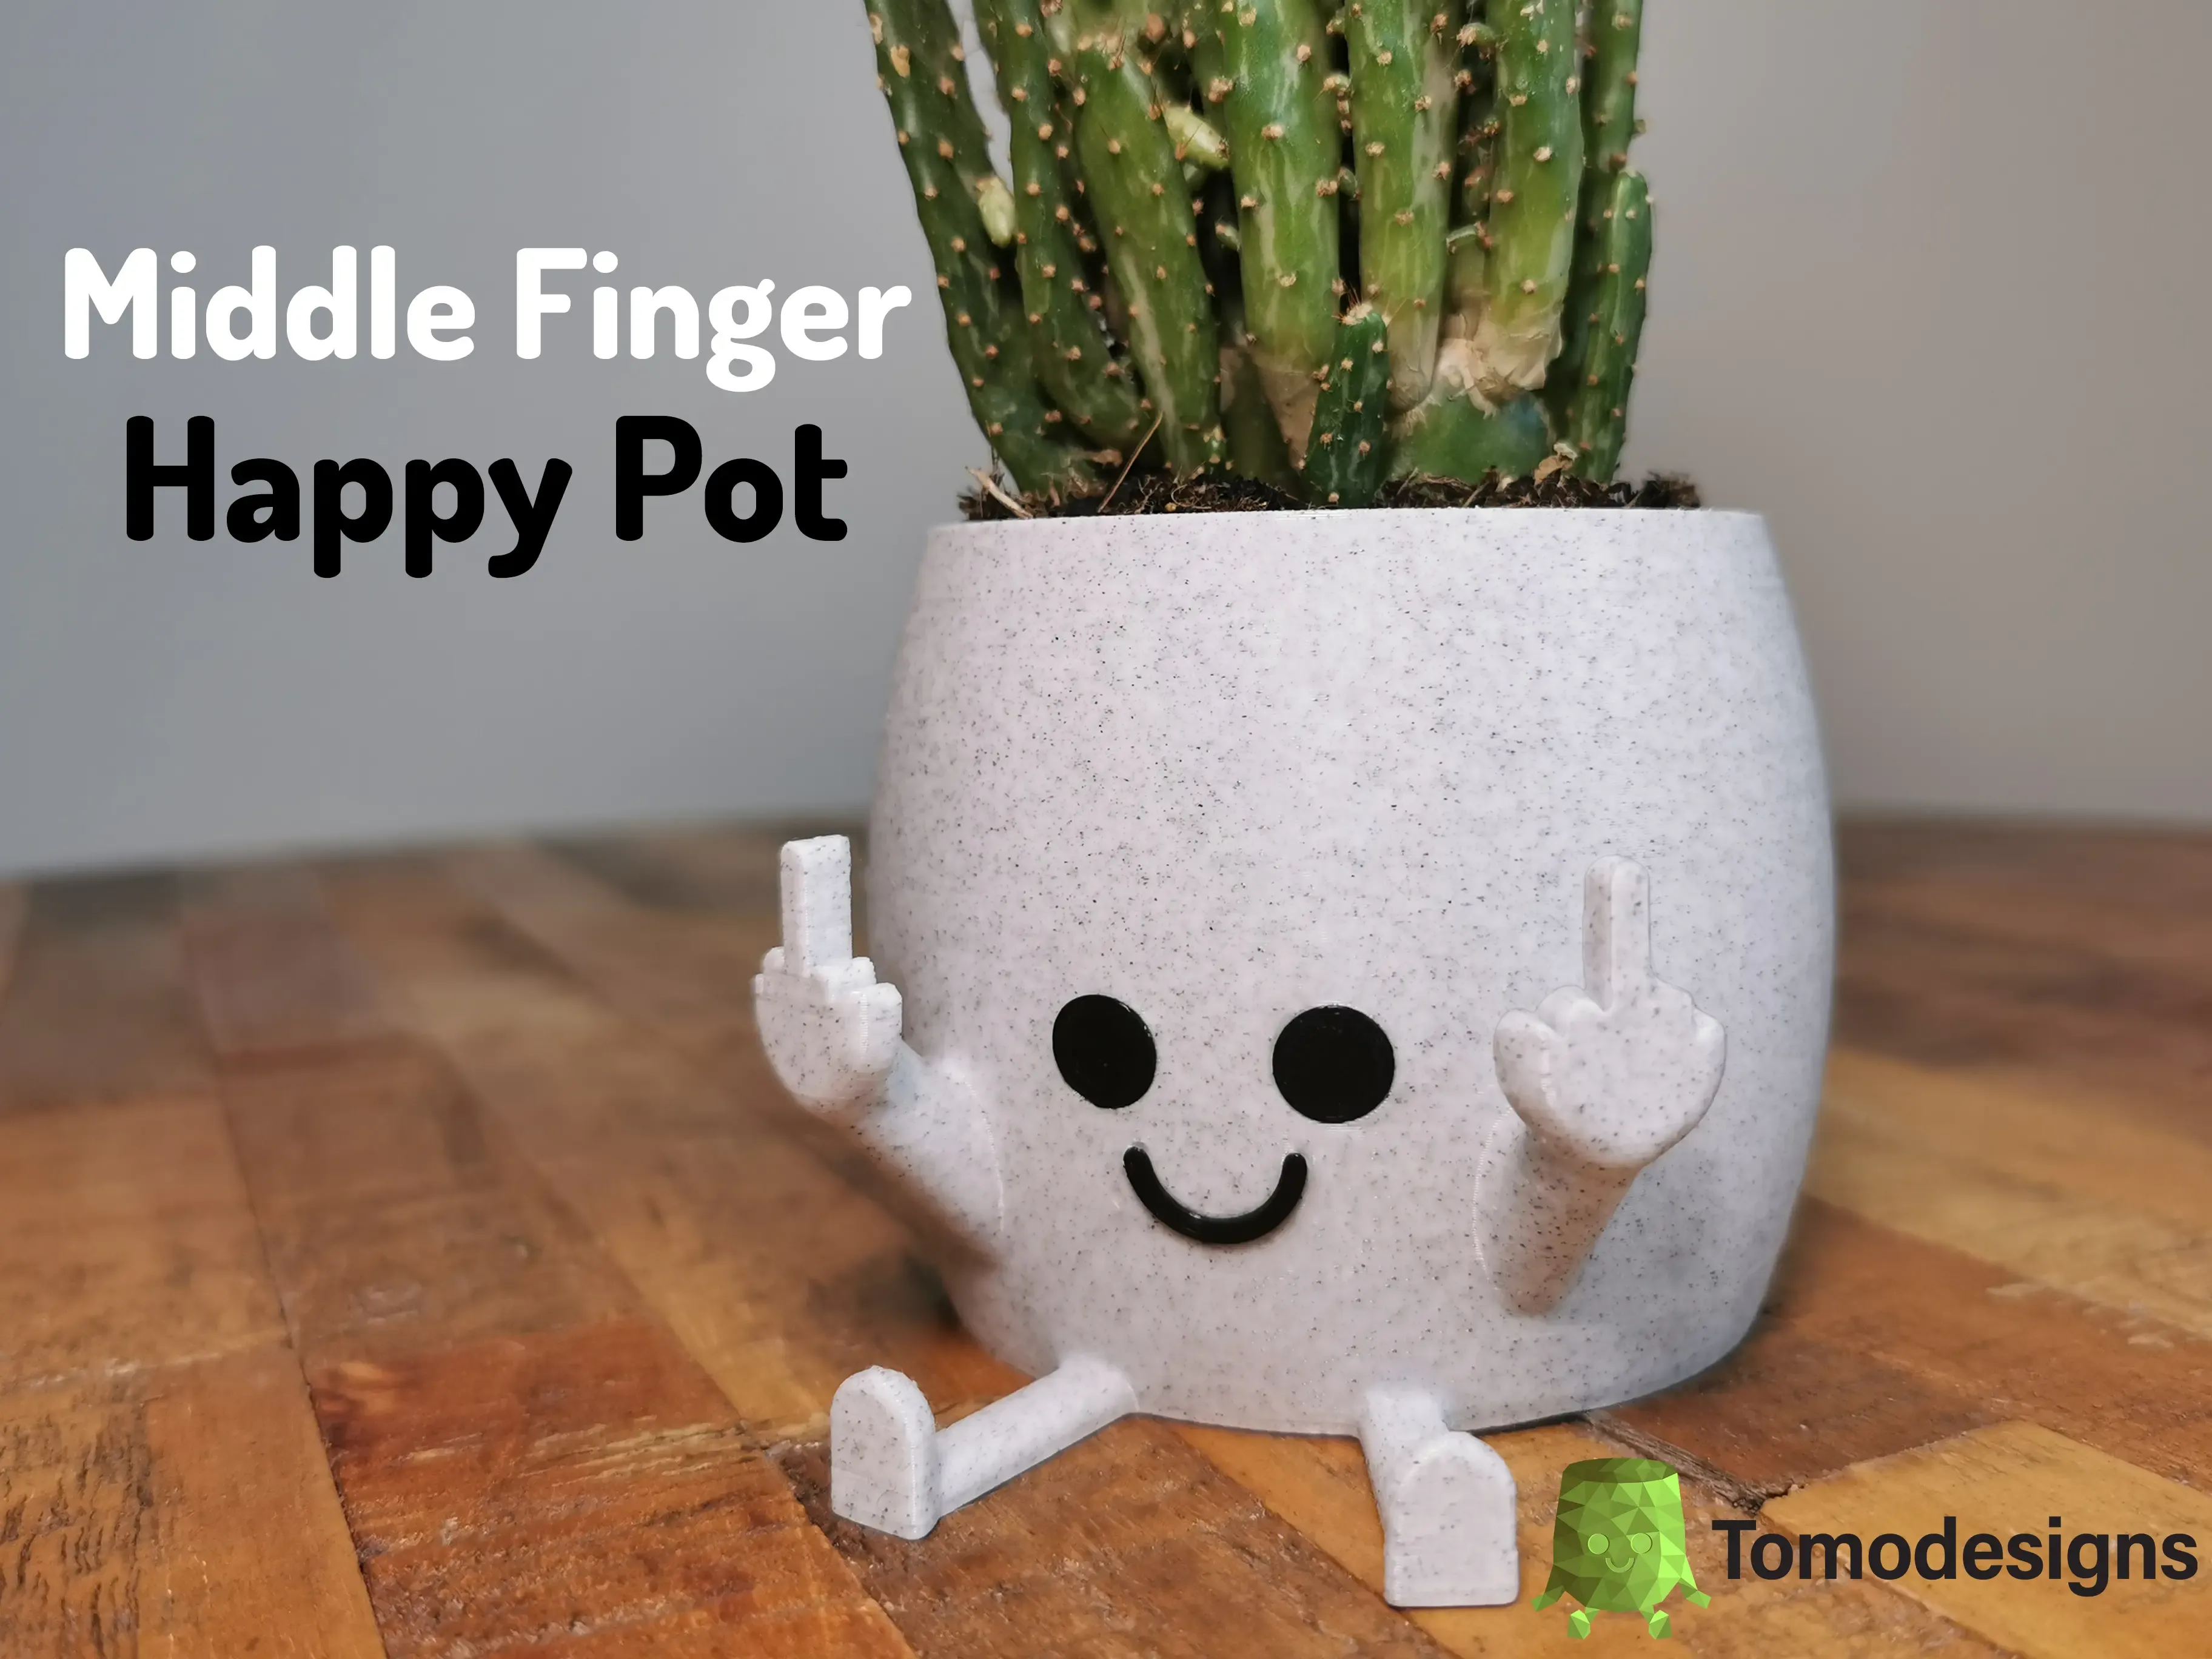 Middle Finger Happy Pot